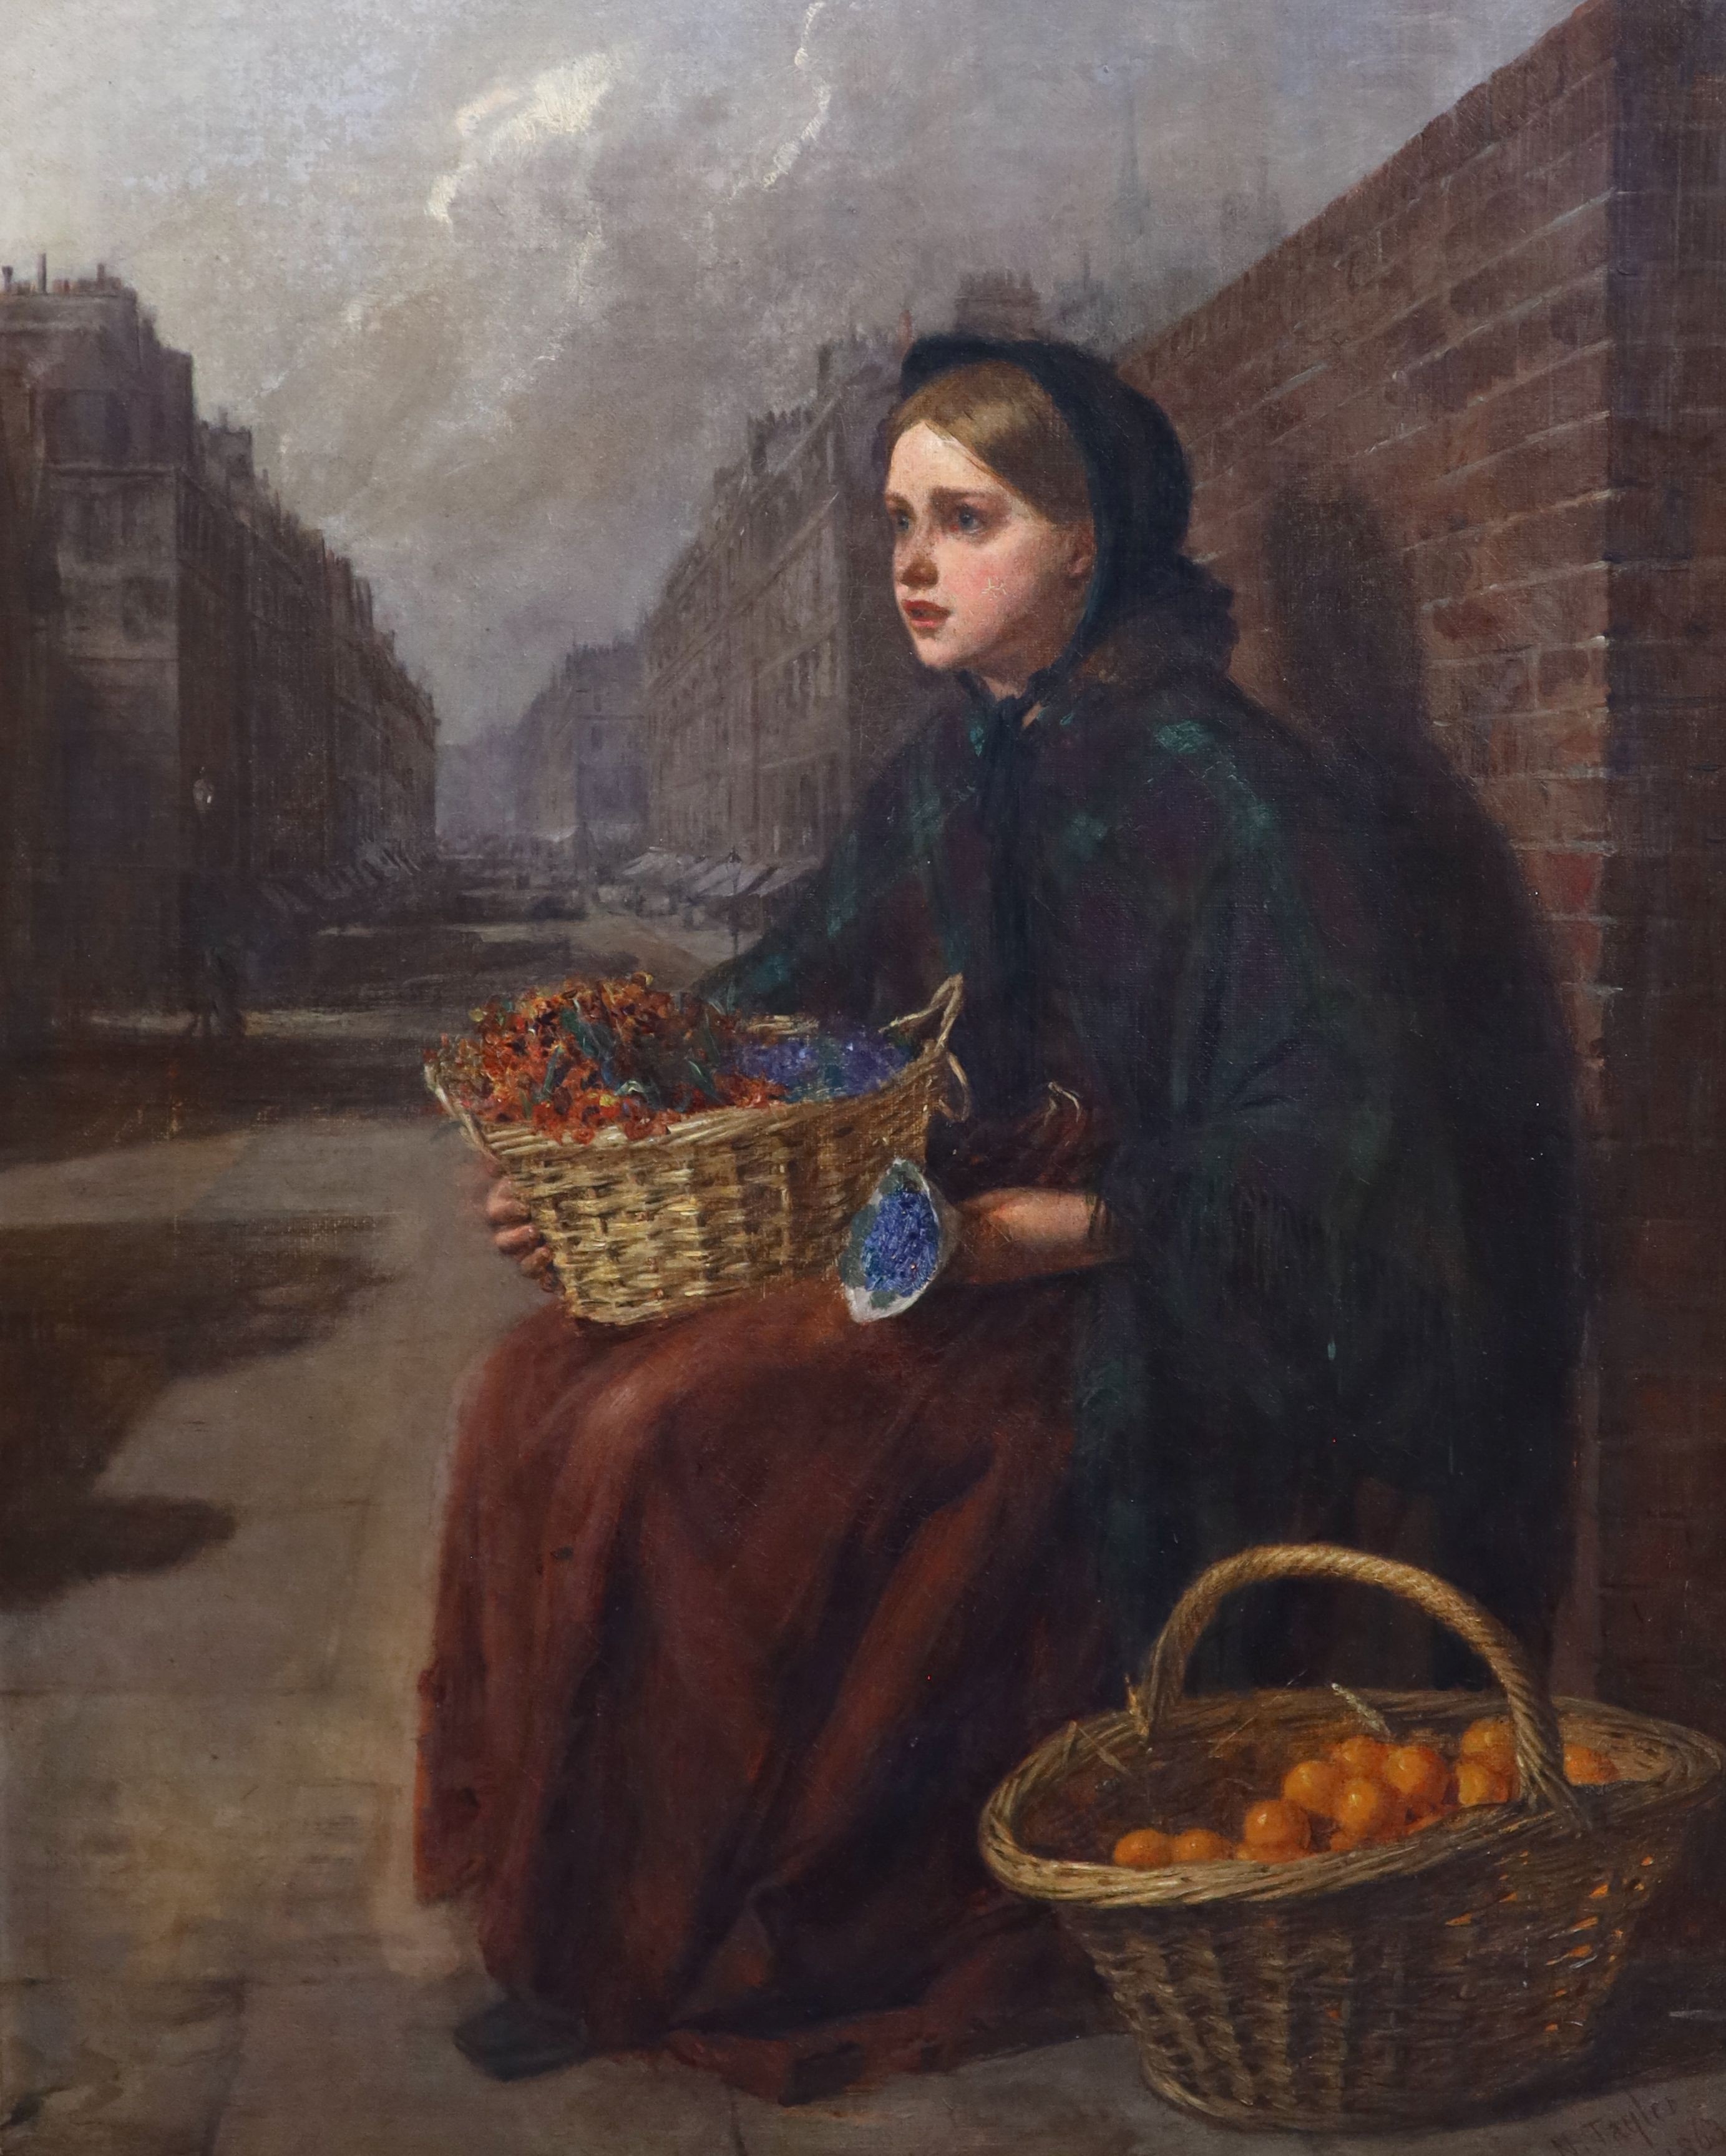 Norman E. Tayler (1843-1915), The Orange Seller, Oil on canvas, 50 x 40cm.